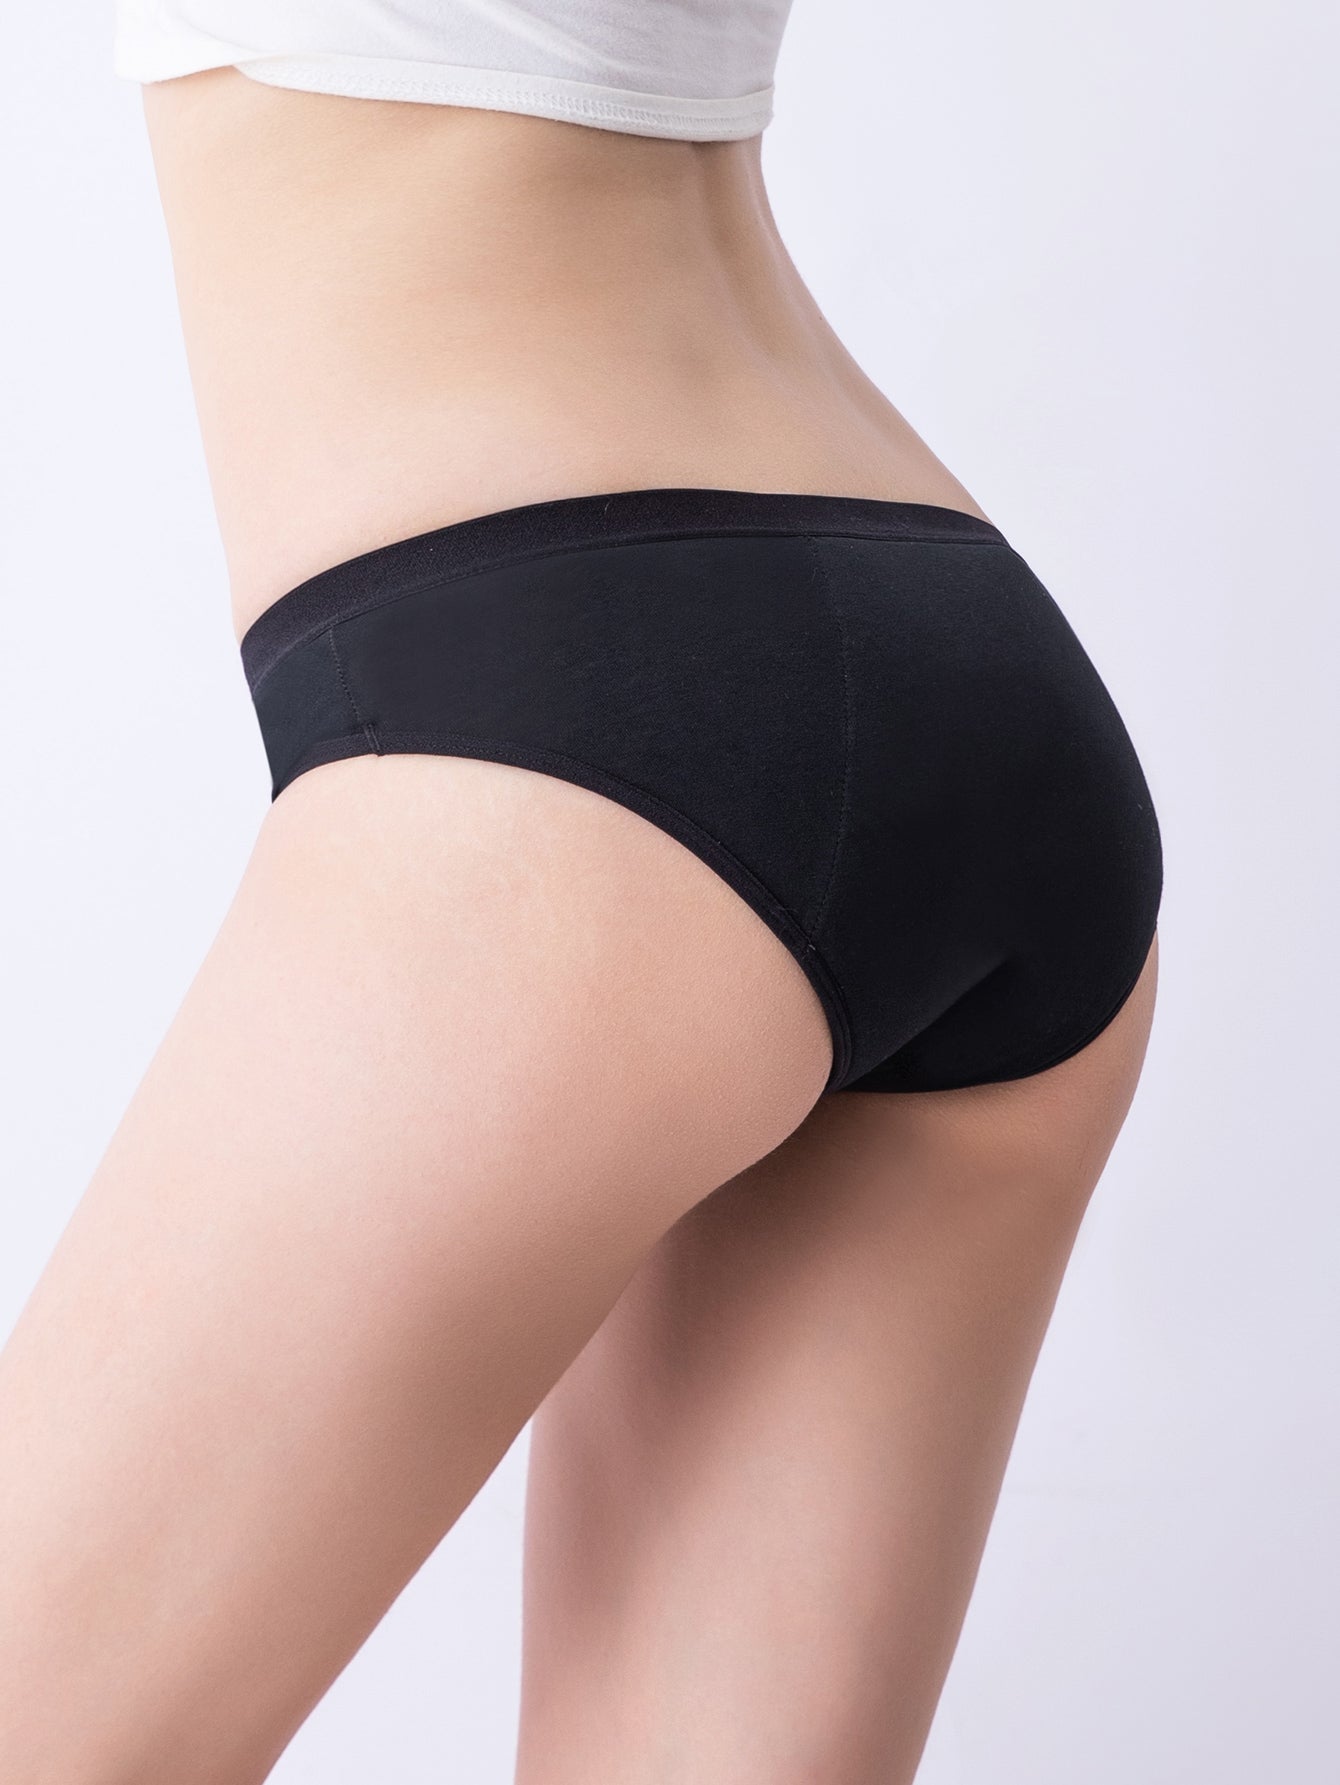 Cotton Menstrual Panty Brief Period Leak Proof Underwear Sai Feel